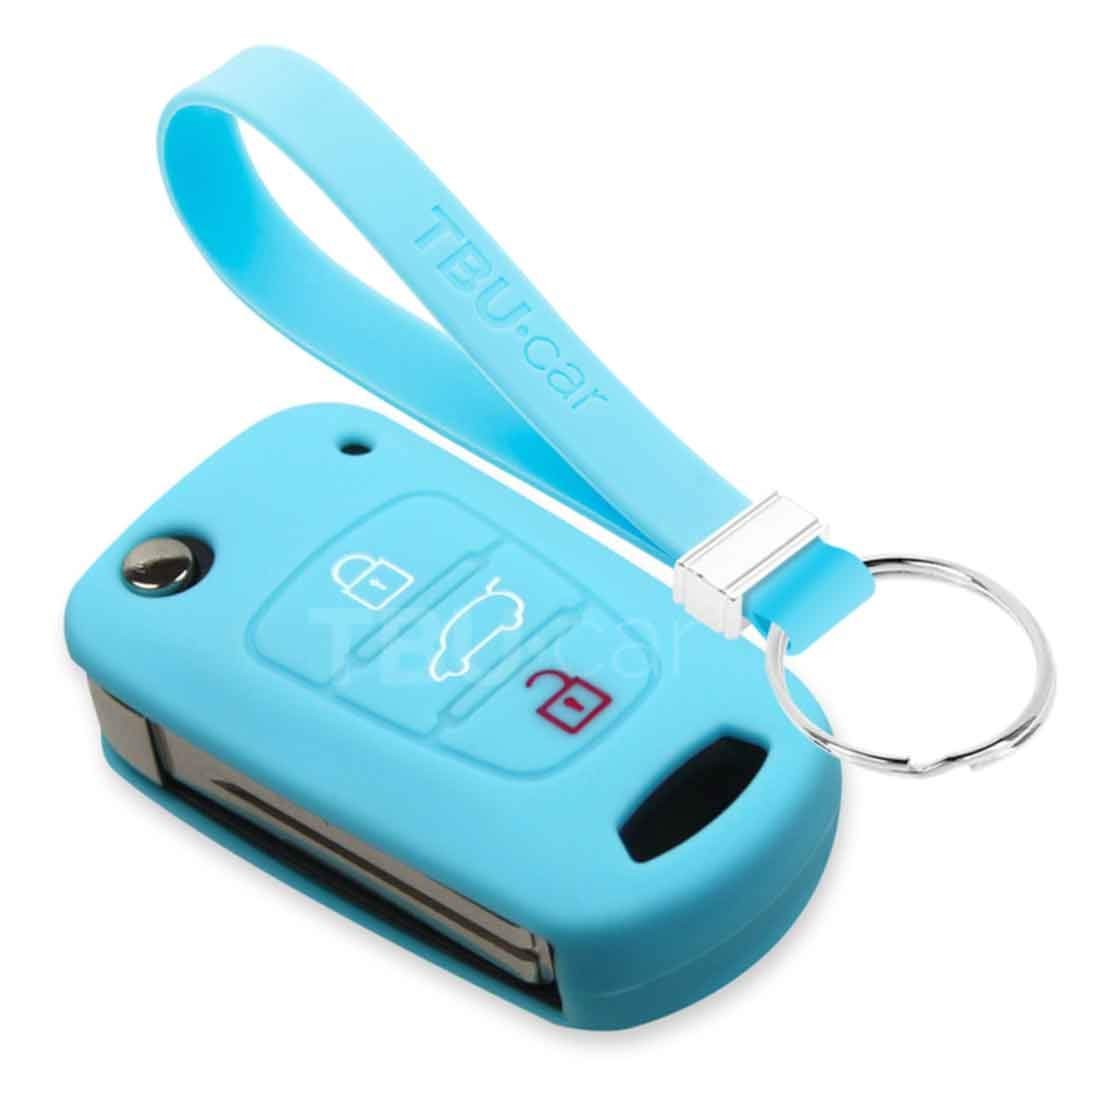 TBU car Autoschlüssel Hülle kompatibel mit Kia 3 Tasten - Schutzhülle aus Silikon - Auto Schlüsselhülle Cover in Hellblau von TBU car